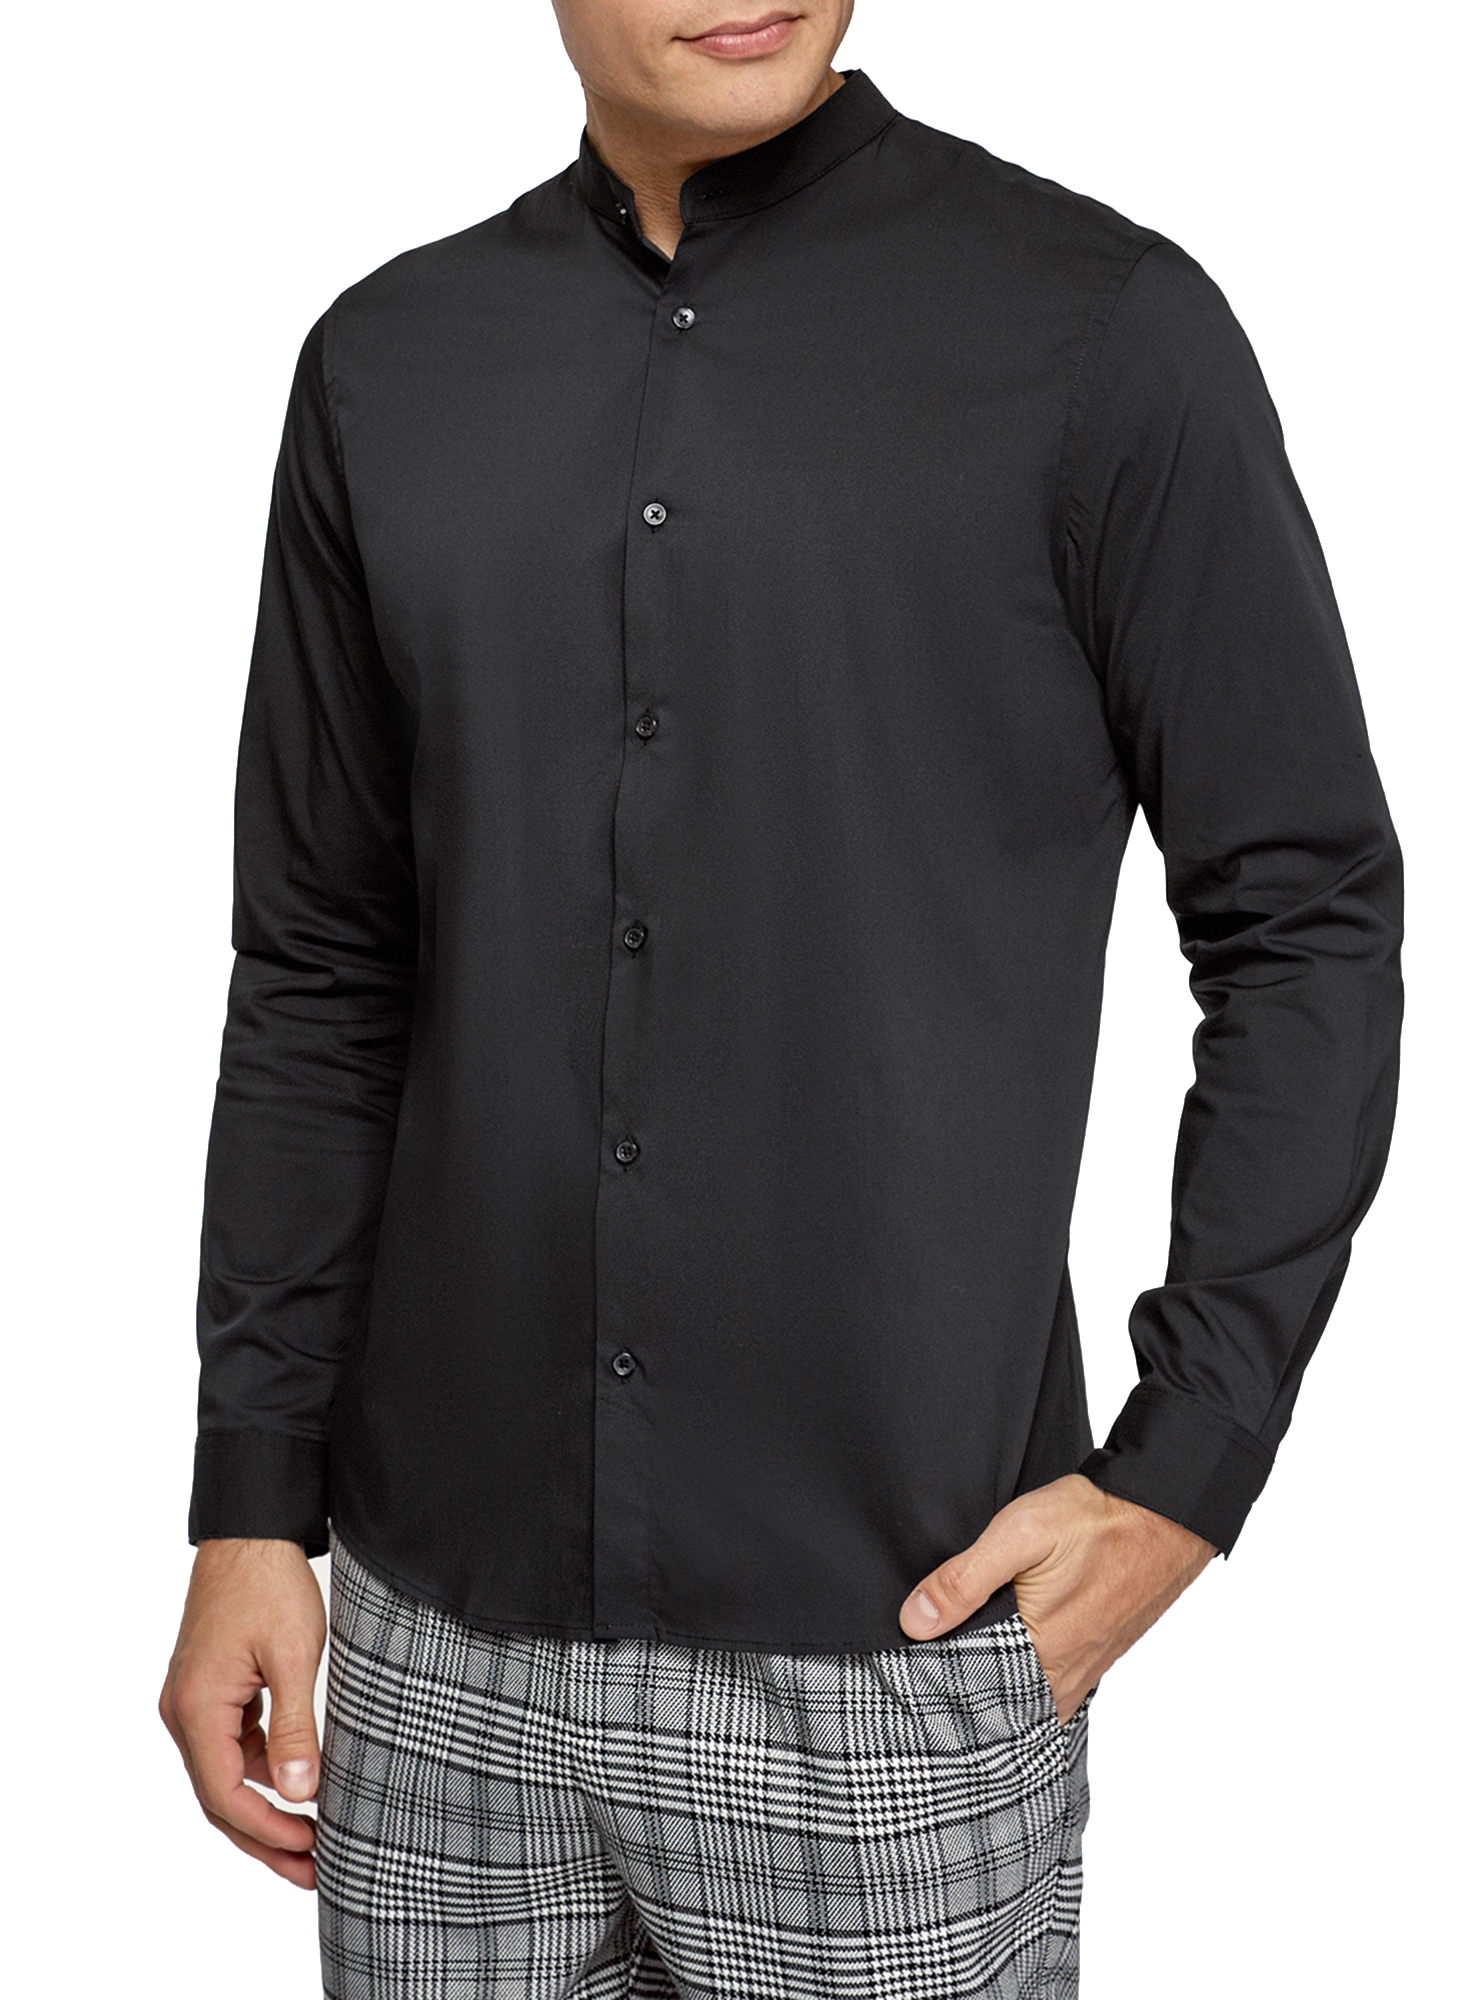 Рубашка мужская oodji 3B140004M черная XL - купить в oodji, цена на Мегамаркет